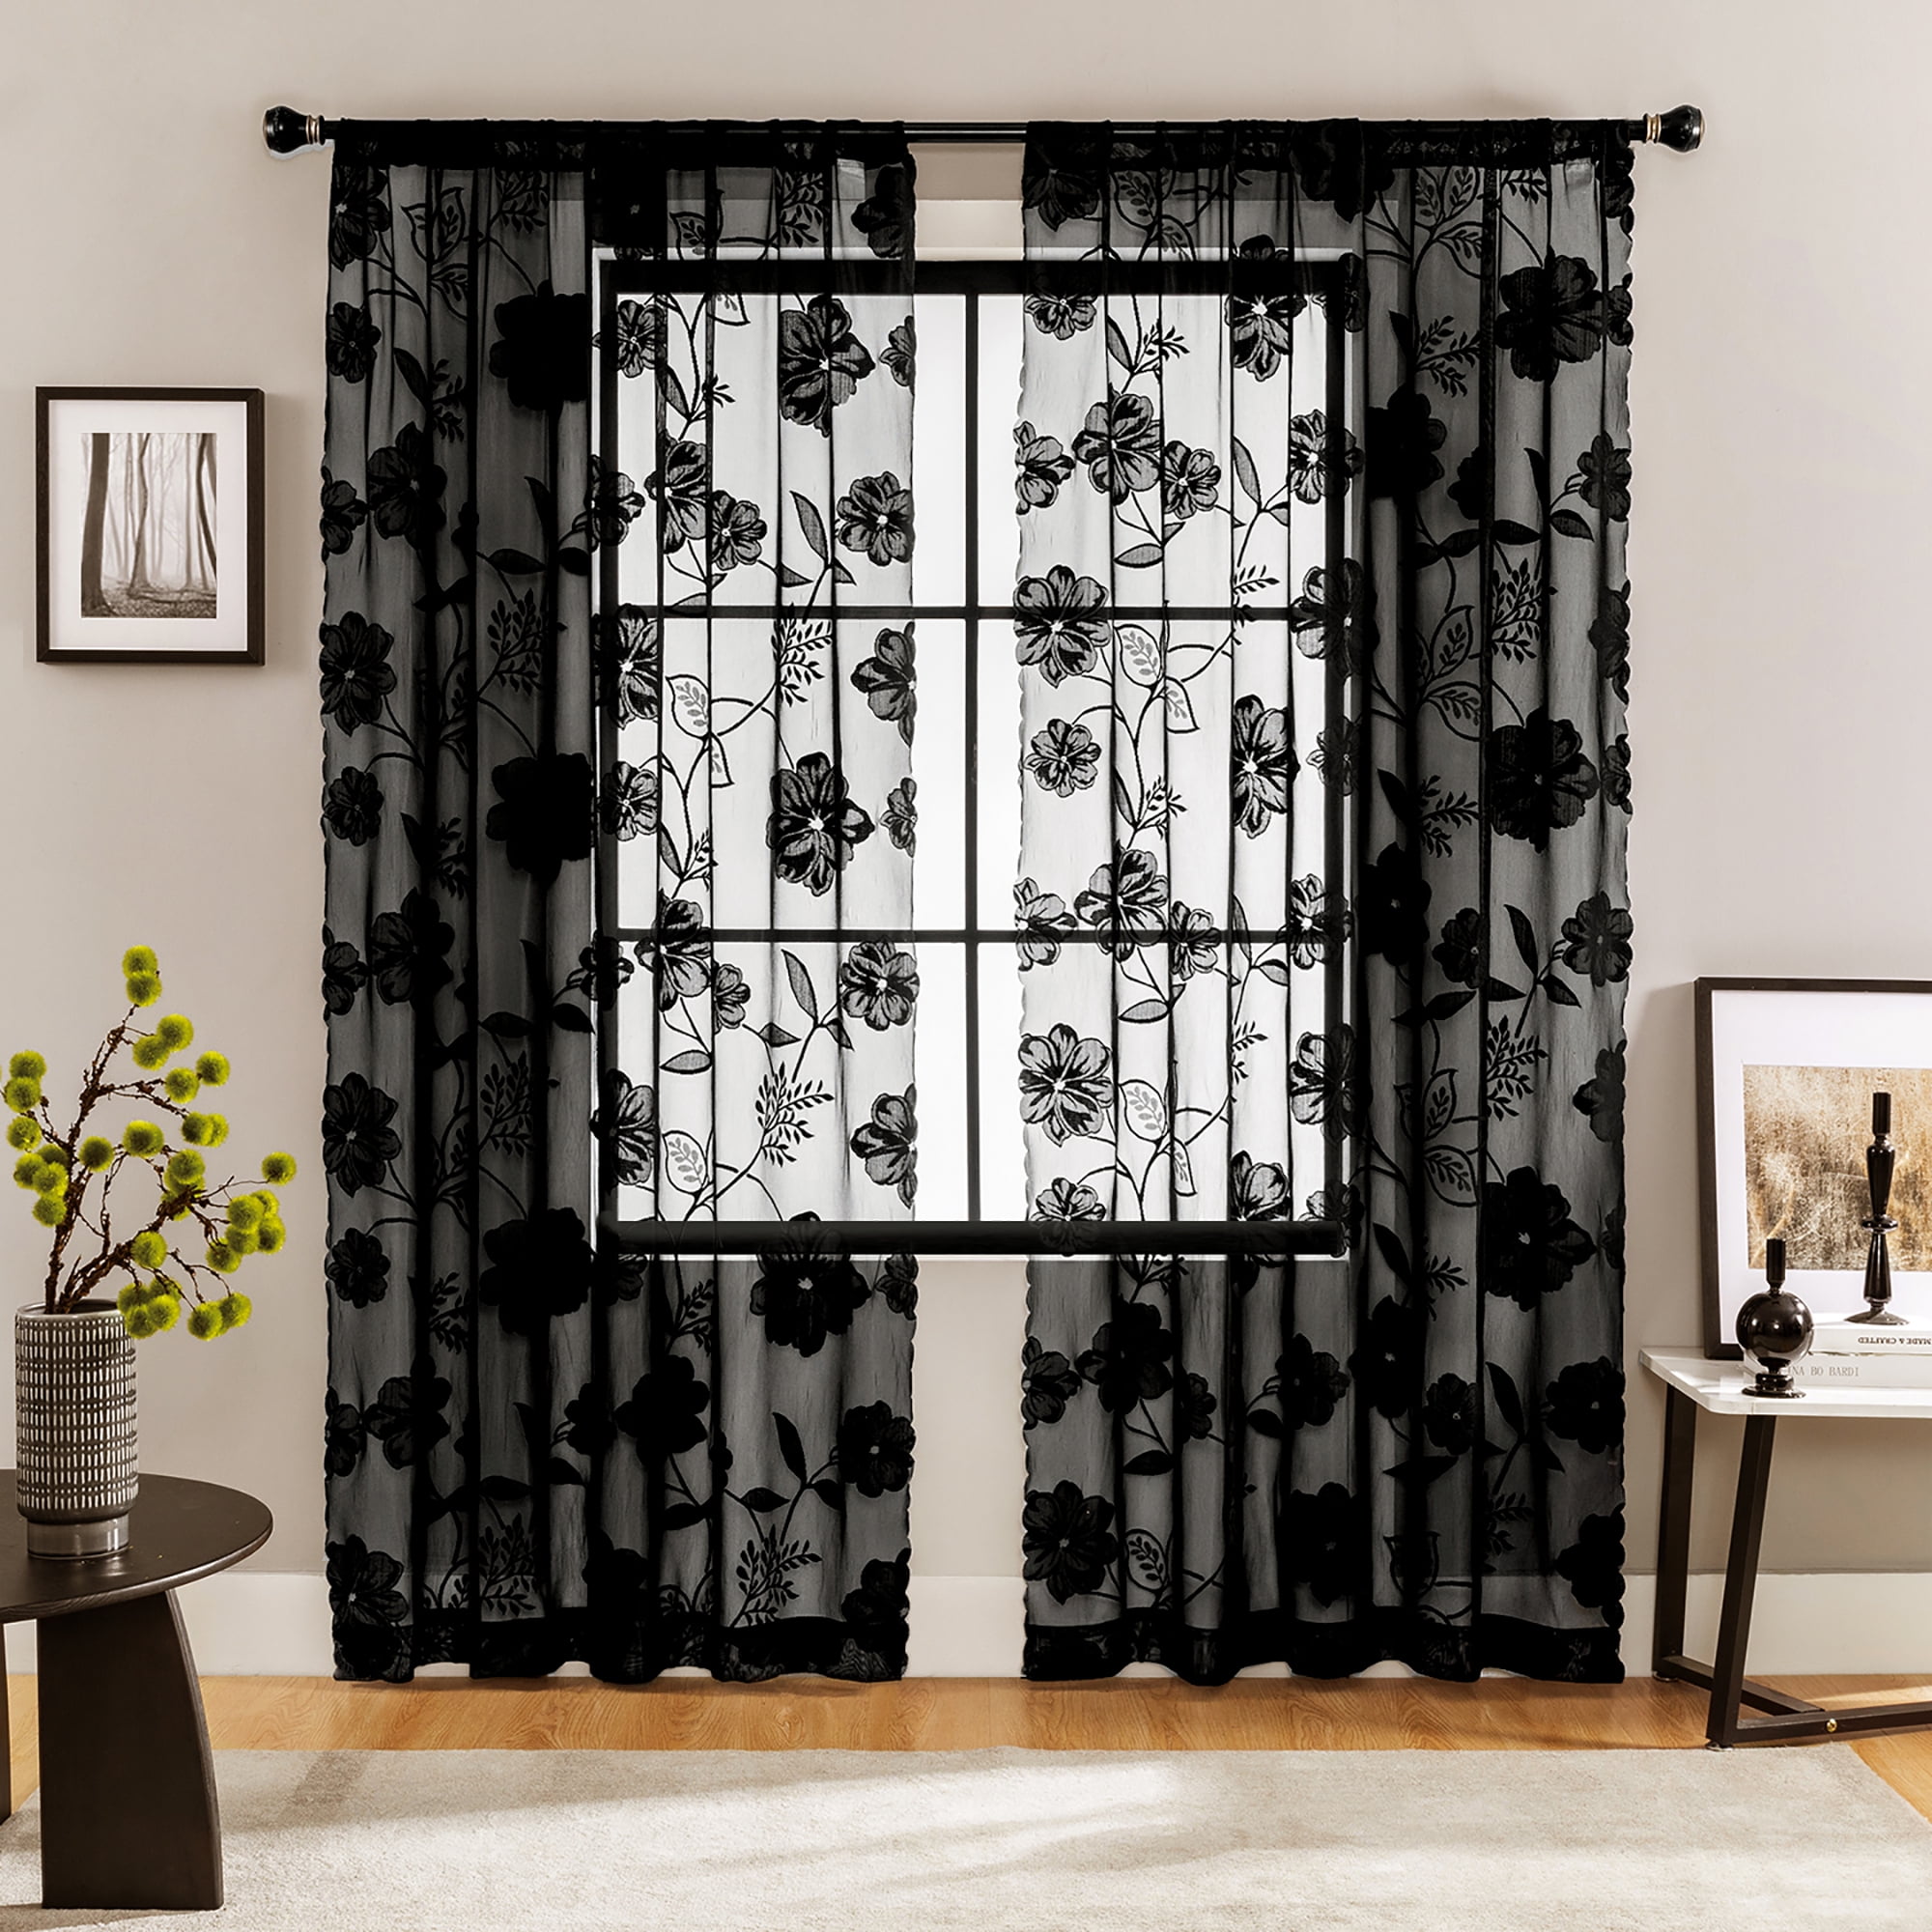 Exultantex Black Sheer Lace Curtains for Living Room Vintage Rose Floral  Embroidered Semi Sheer Window Panels Leaf Sheer Drapes with Scalloped